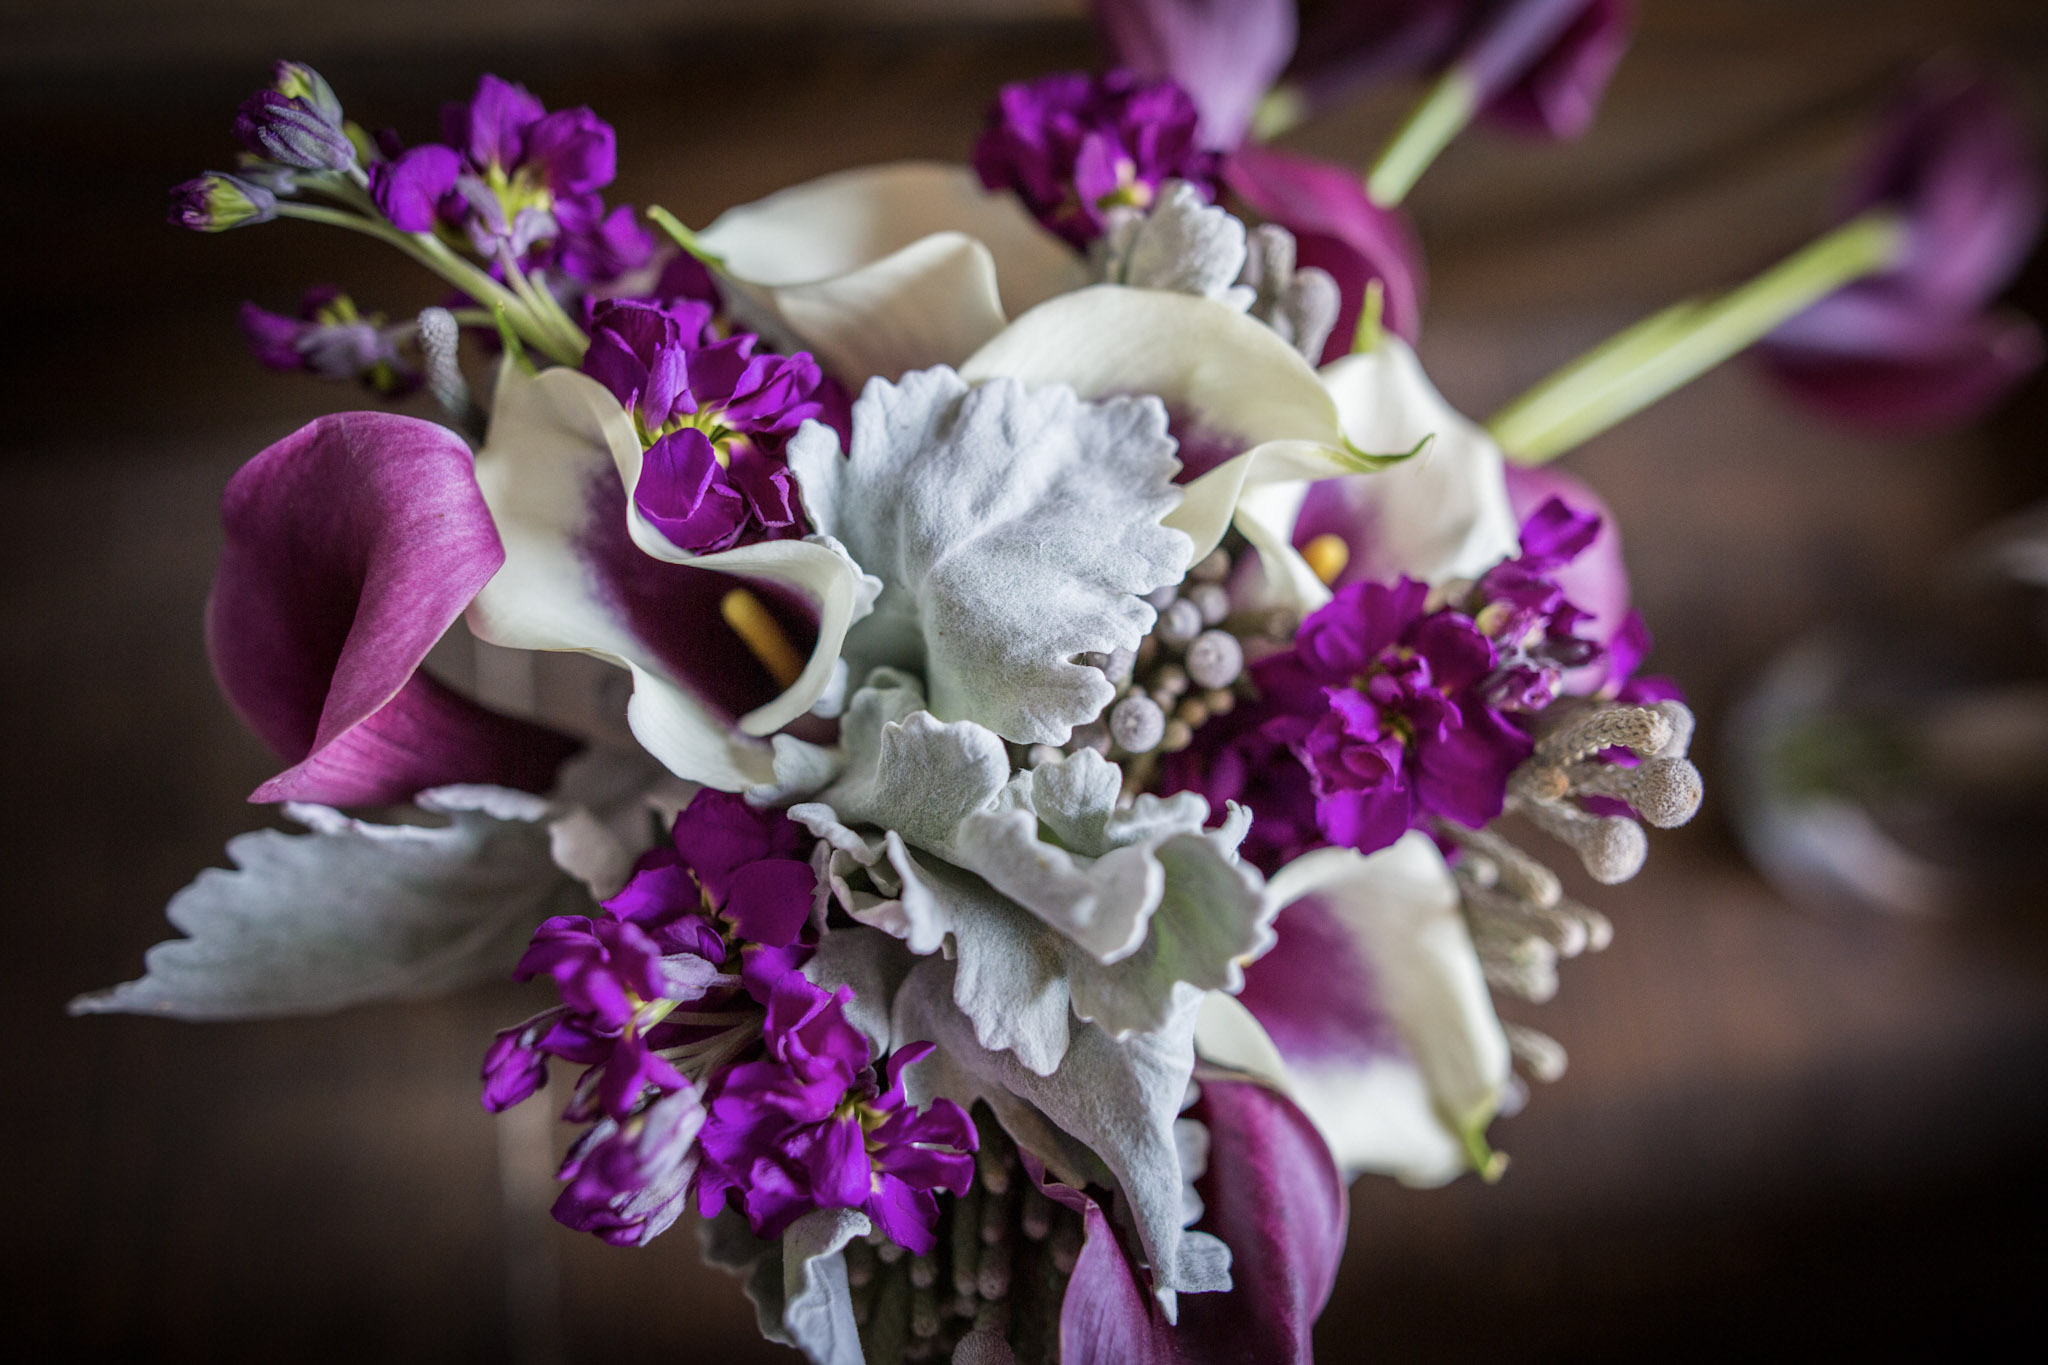 Kansas_City_Small_Wedding_Venue_Elope_Intimate_Ceremony_Budget_Affordable_Summer_Flowers_Constance & Carissa-001.jpg